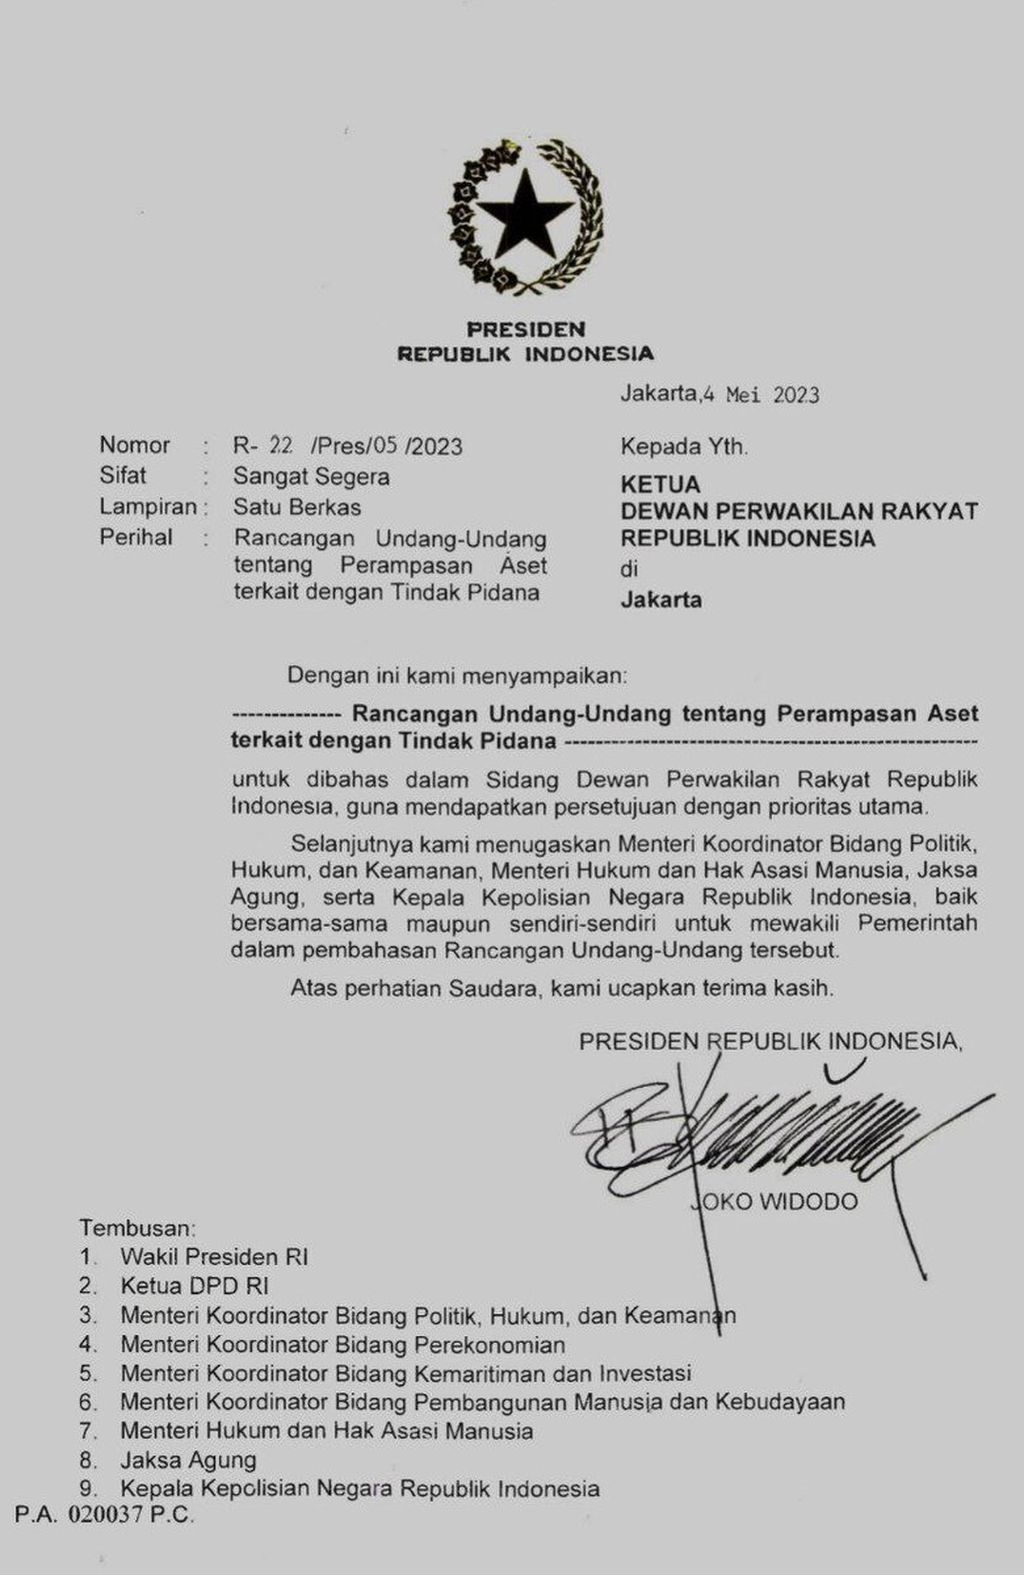 Hasil tangkapan layar surat presiden yang dikirimkan pemerintah kepada DPR sebagai permintaan untuk membahas bersama draf Rancangan Undang-Undang Perampasan Aset. Surat ditandatangani oleh Presiden Joko Widodo dan dikirimkan ke DPR pada Kamis (4/5/2023).